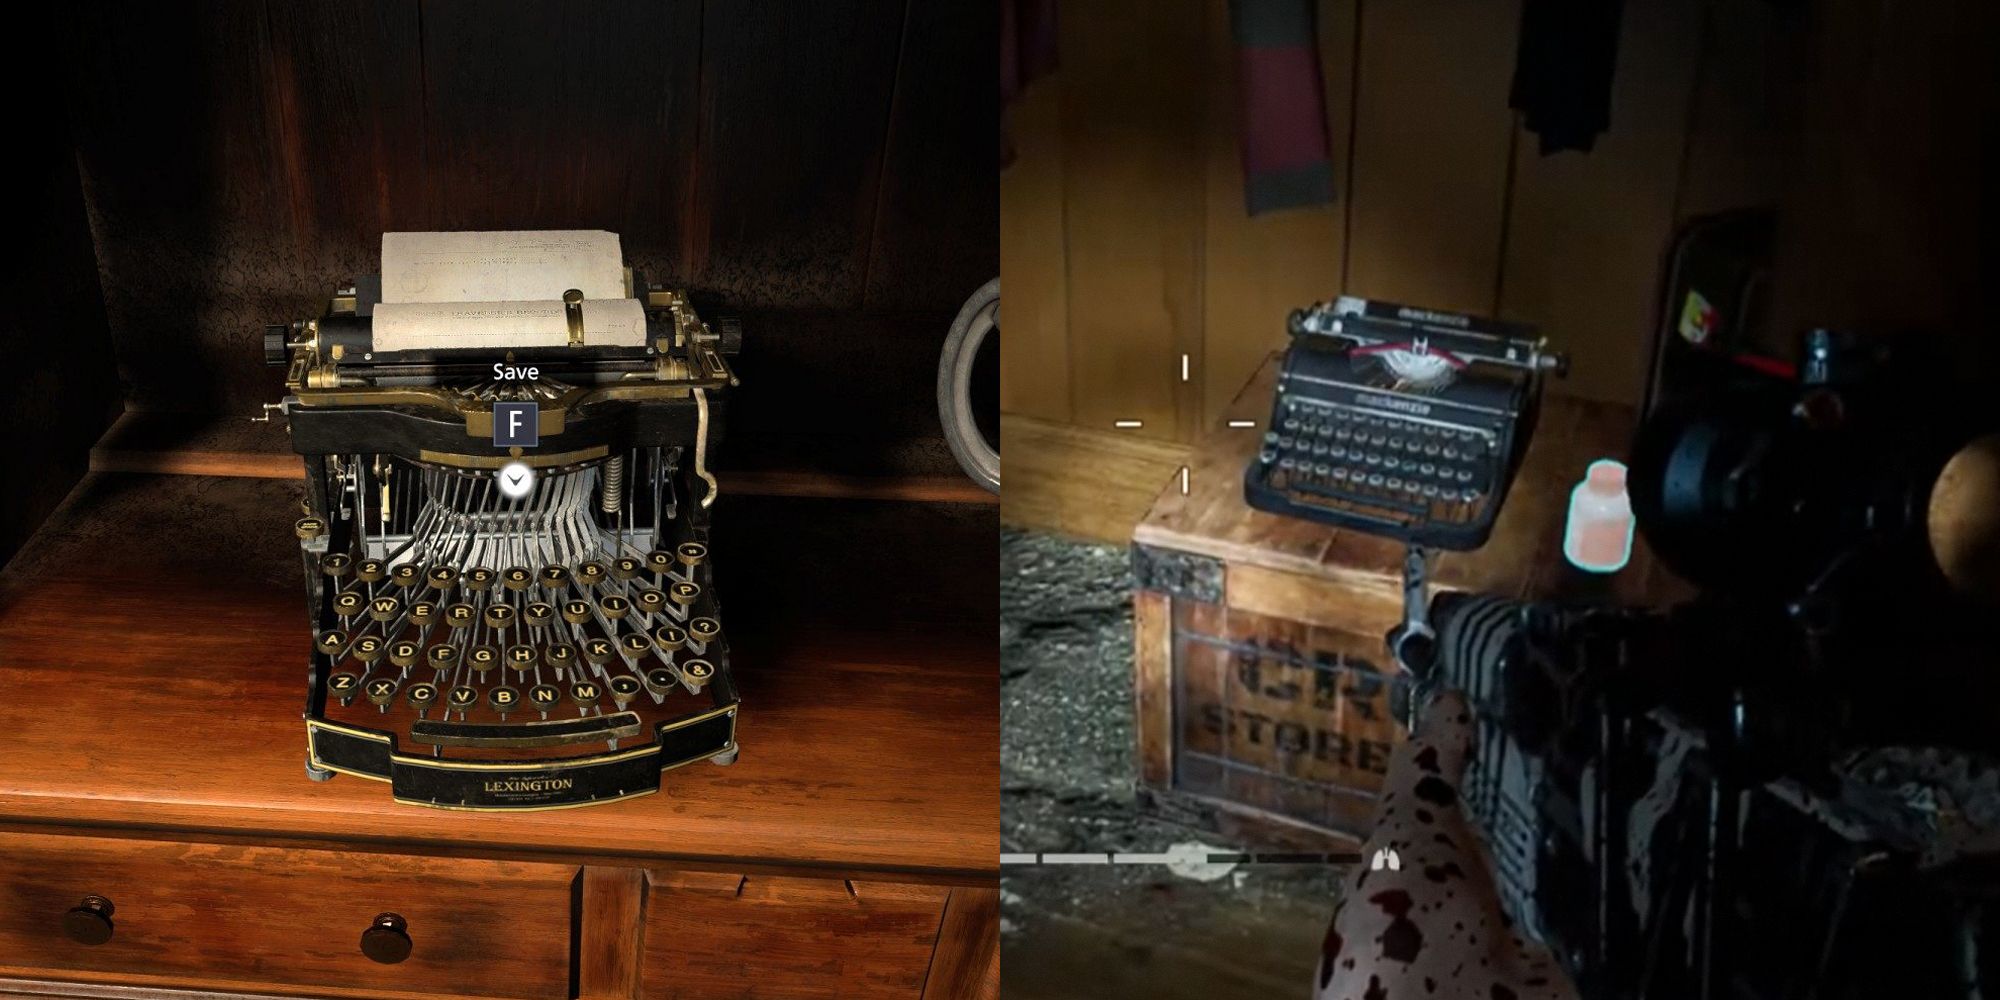 Resident Evil, Back 4 Blood split image. Both photos are of typewriters.